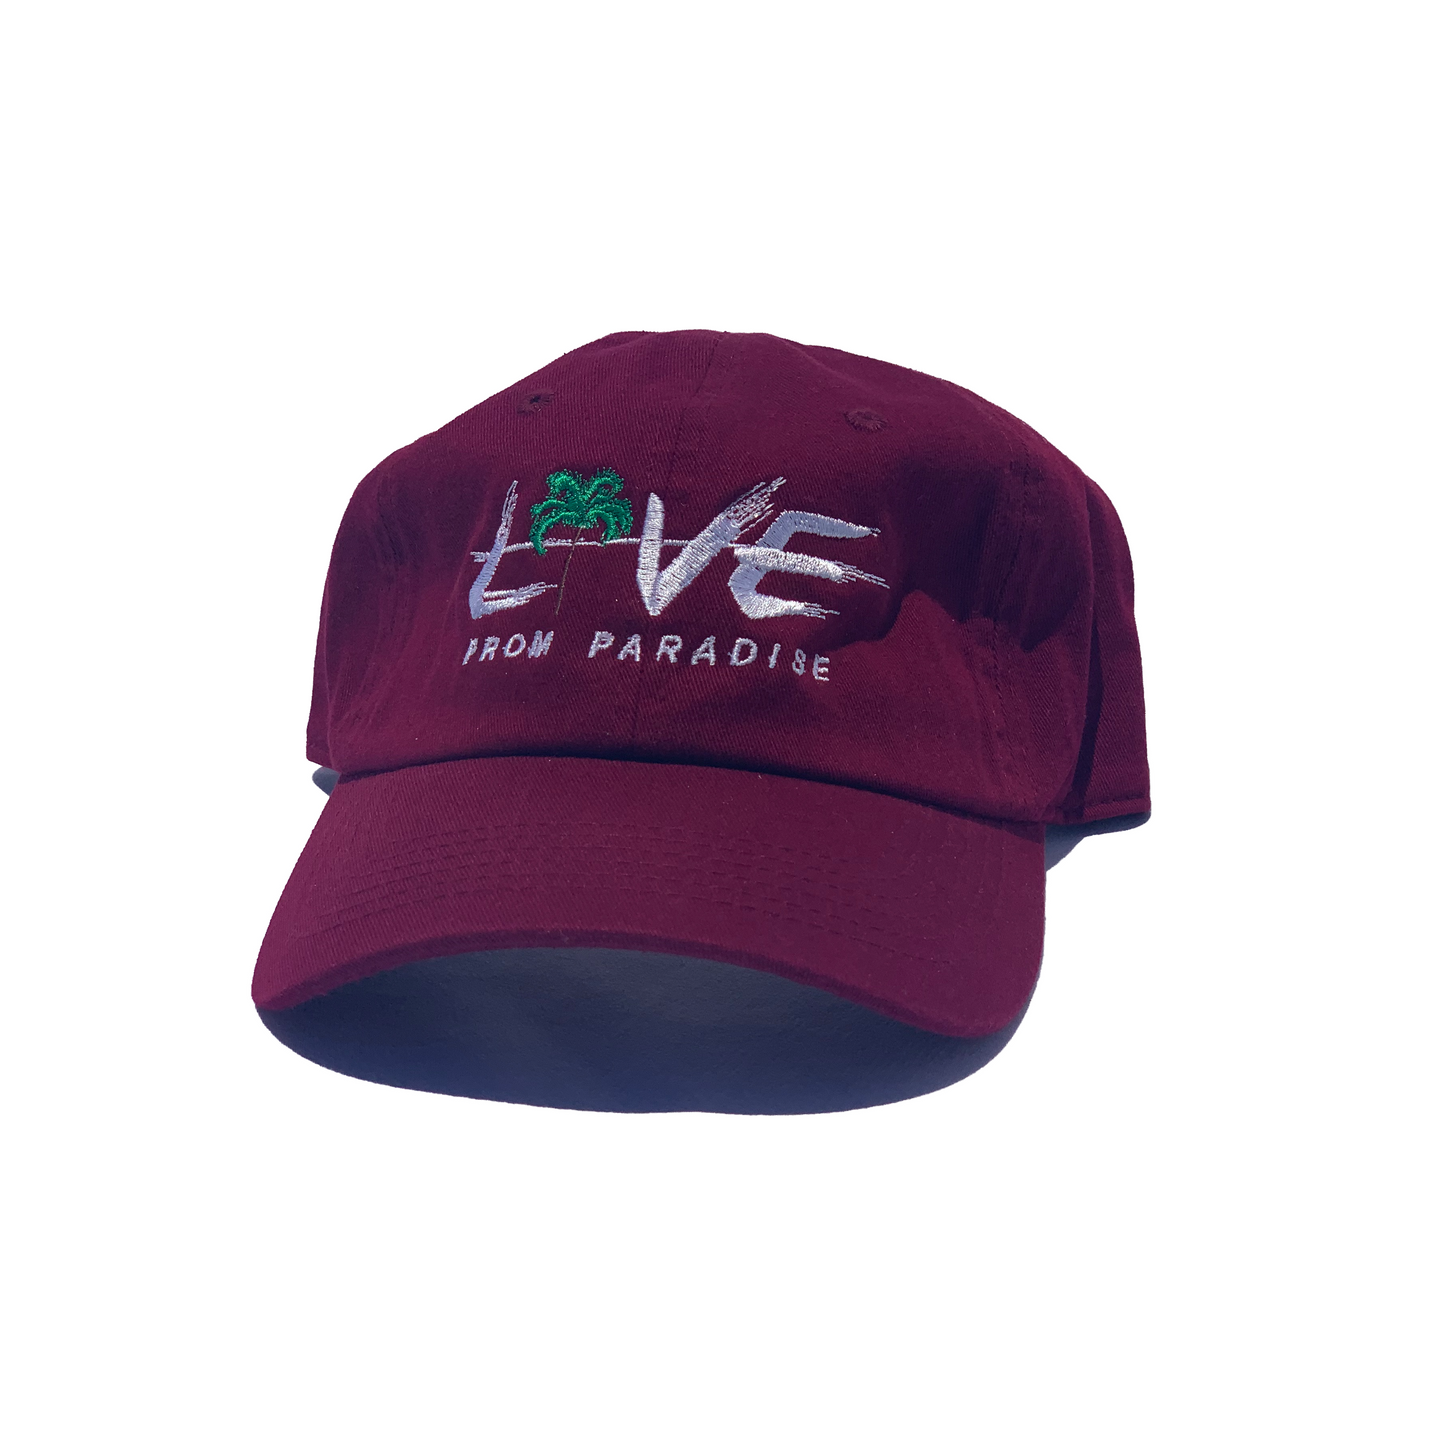 Live Hat- 3rd generation